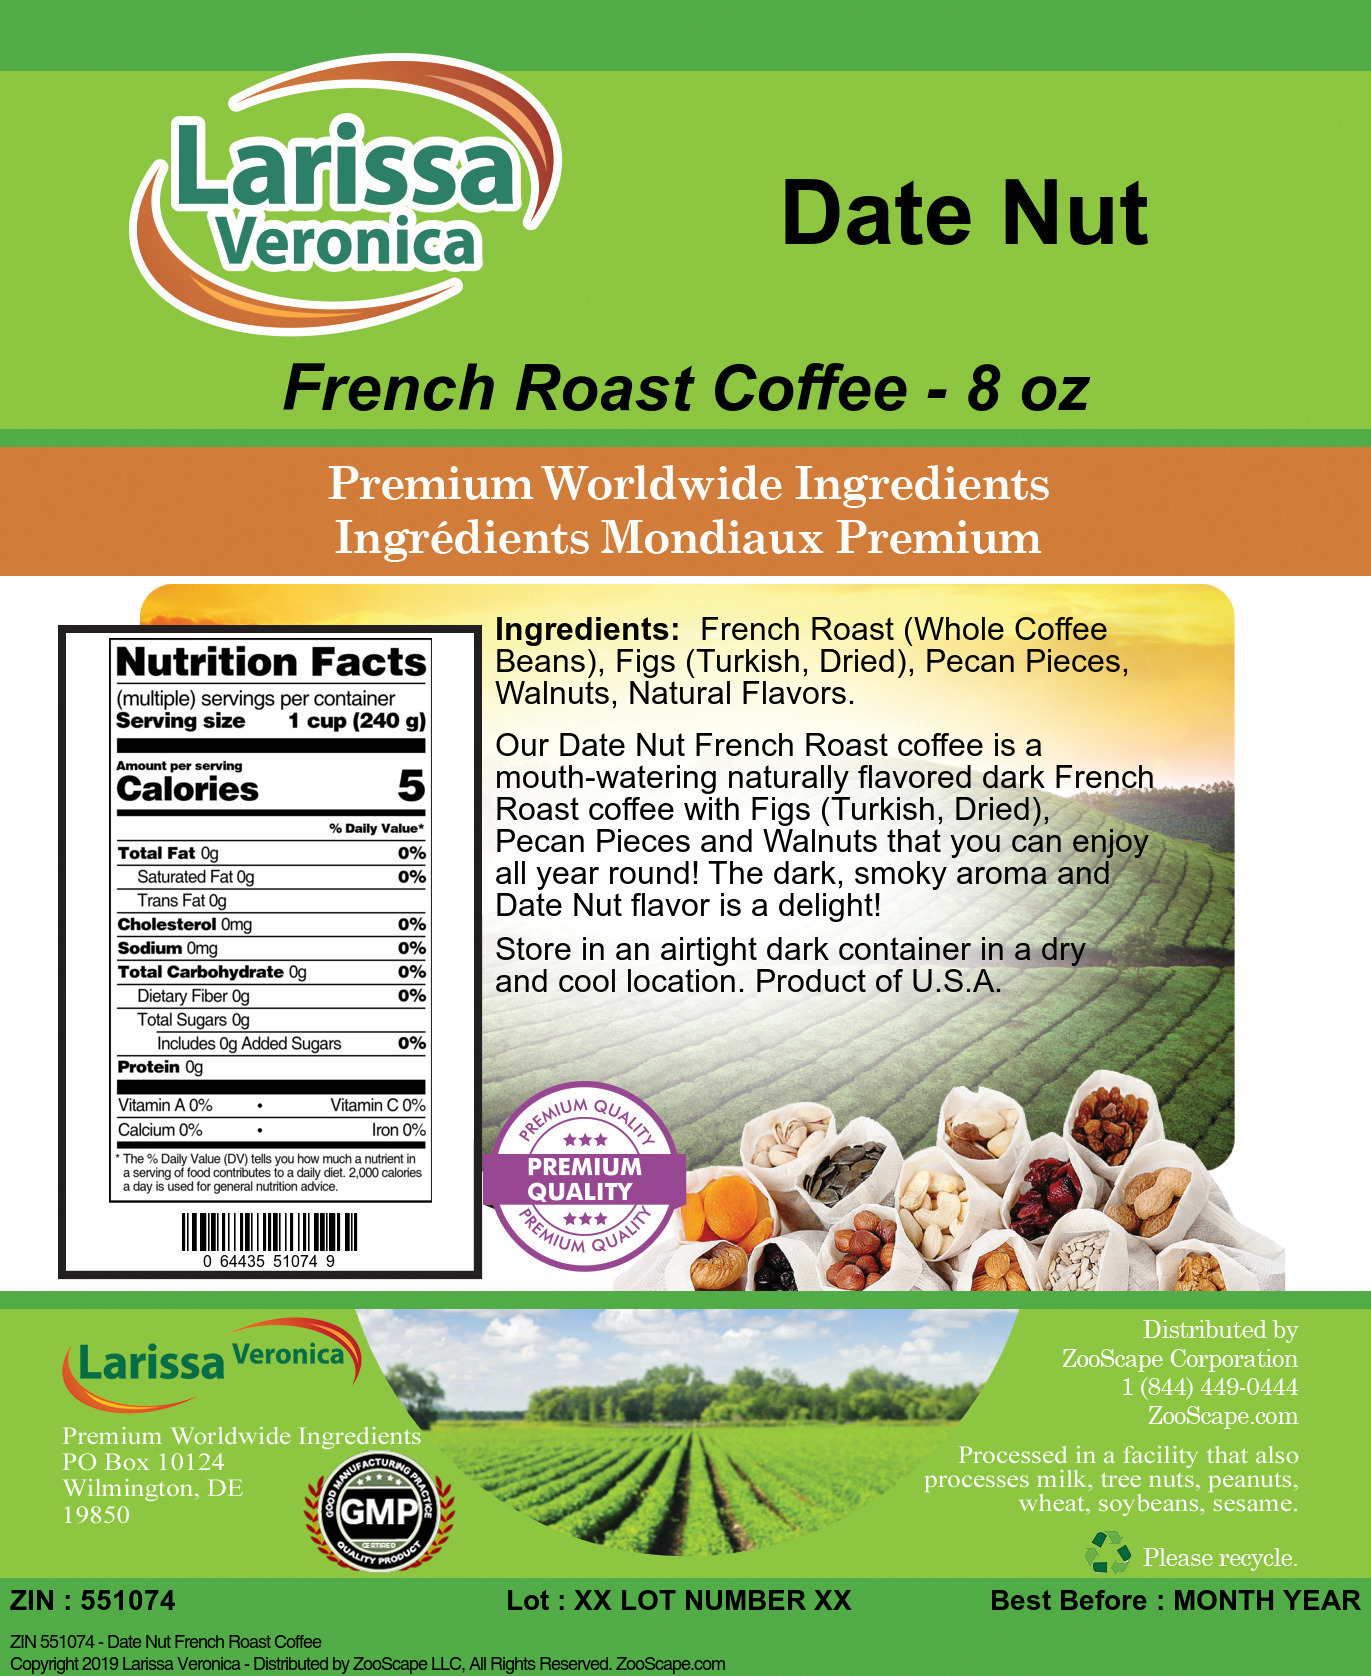 Date Nut French Roast Coffee - Label